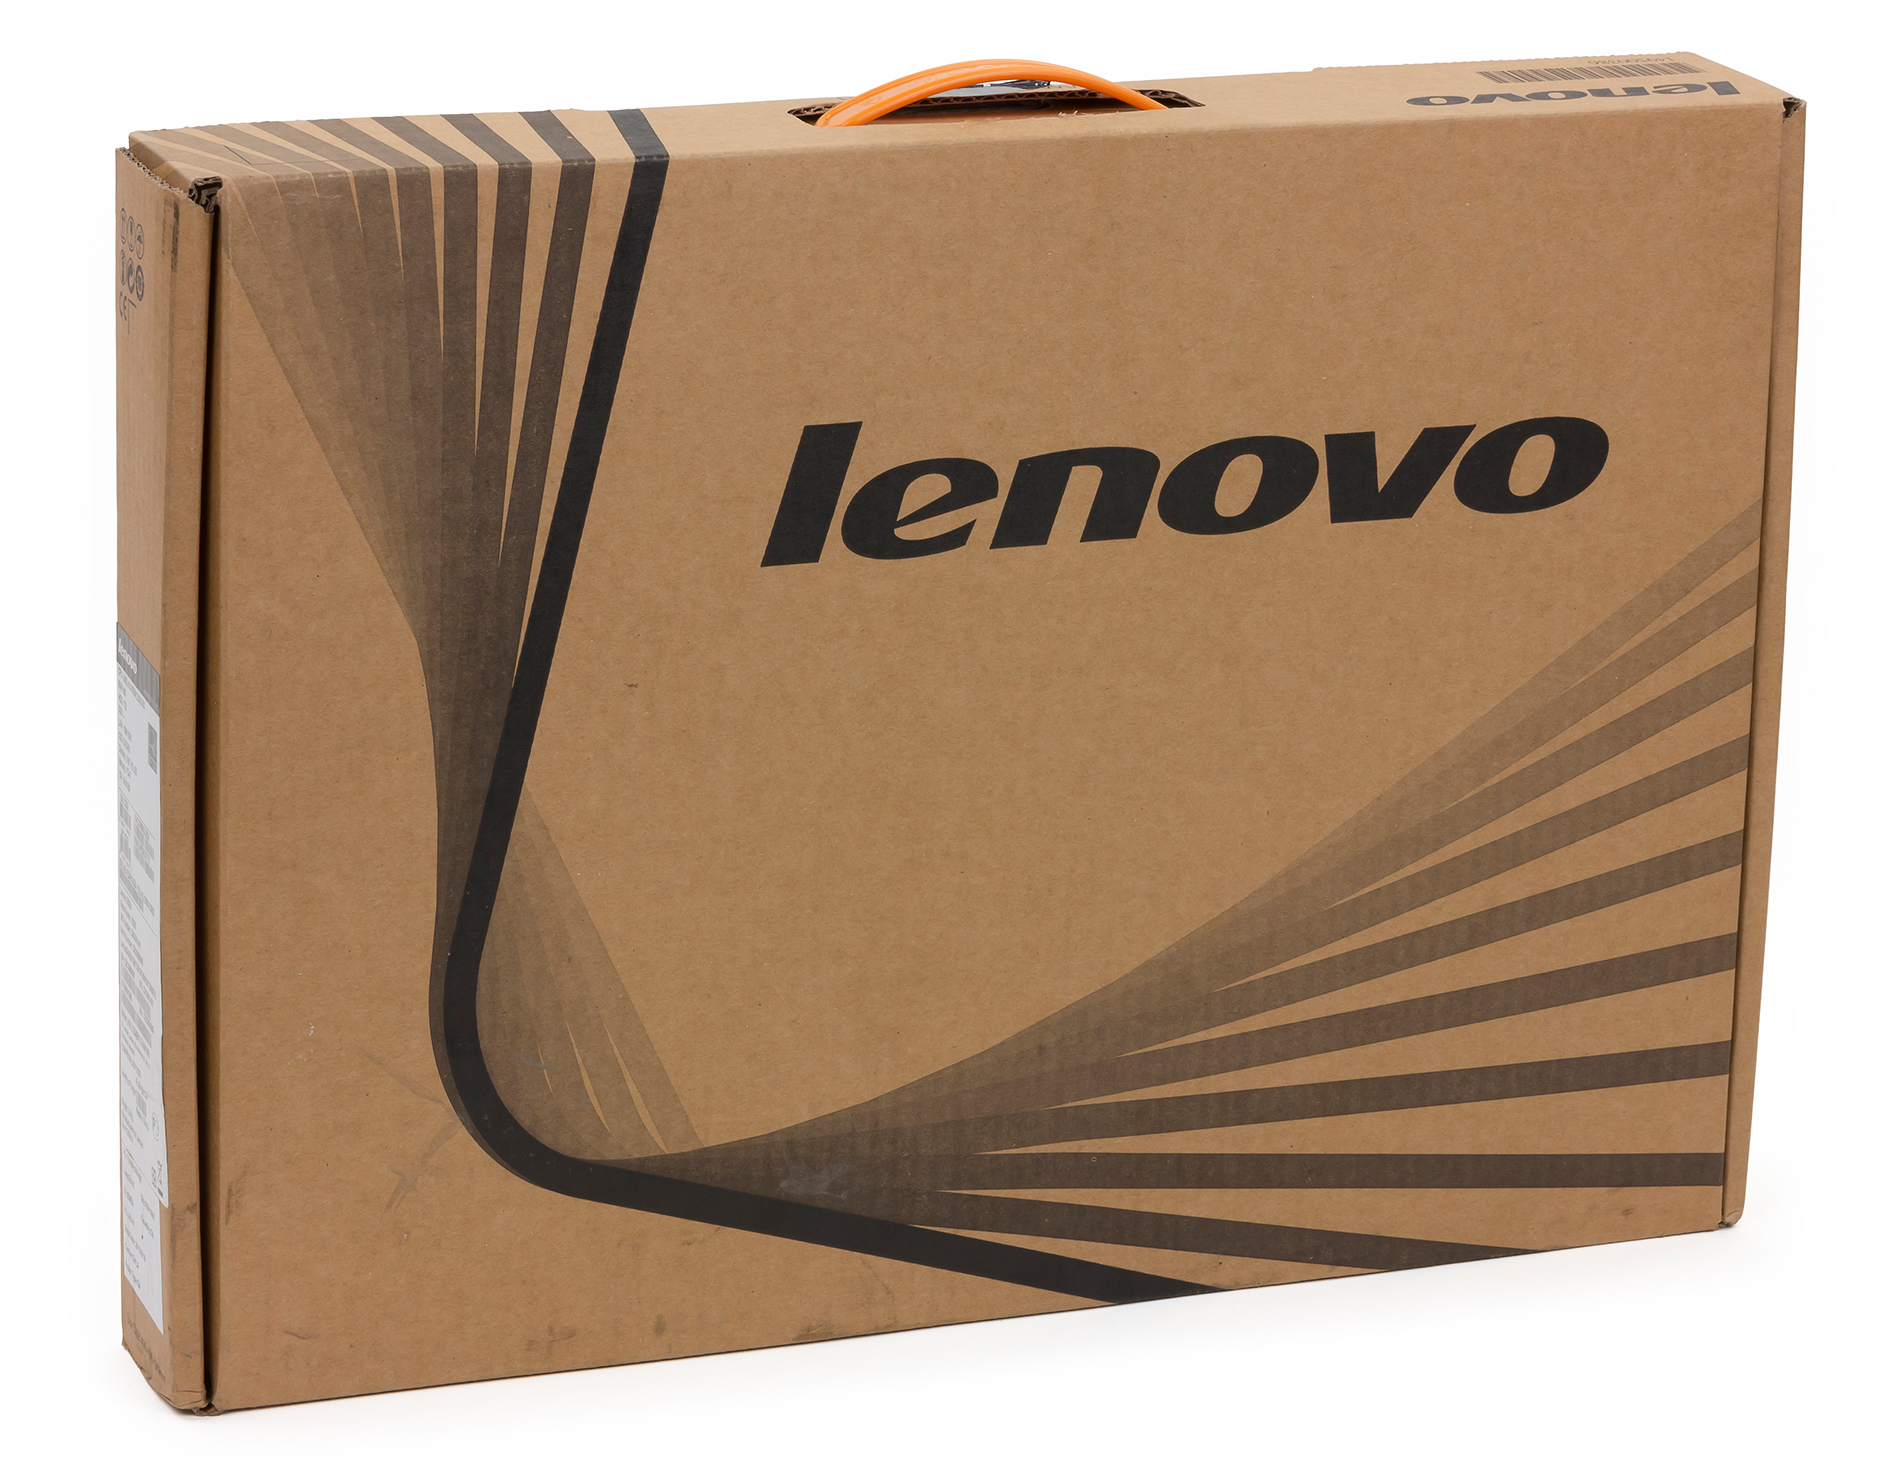 Ноутбук Lenovo G505s Цена В Эльдорадо